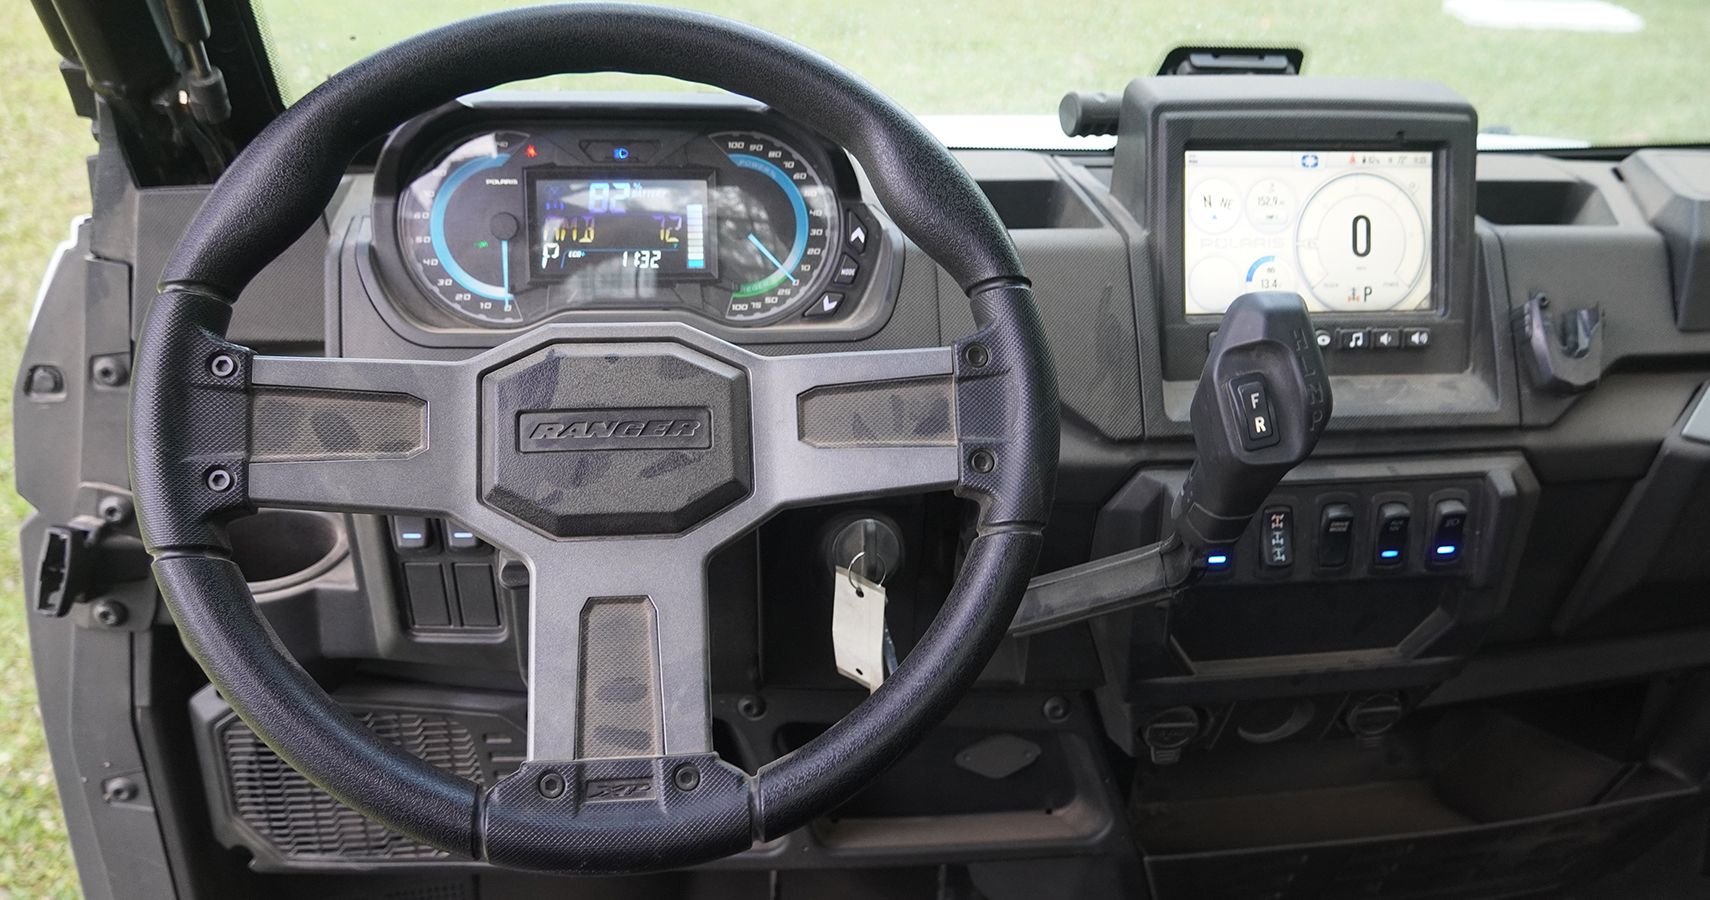 Polaris Ranger XP Kinetic Review Dash and steering wheel